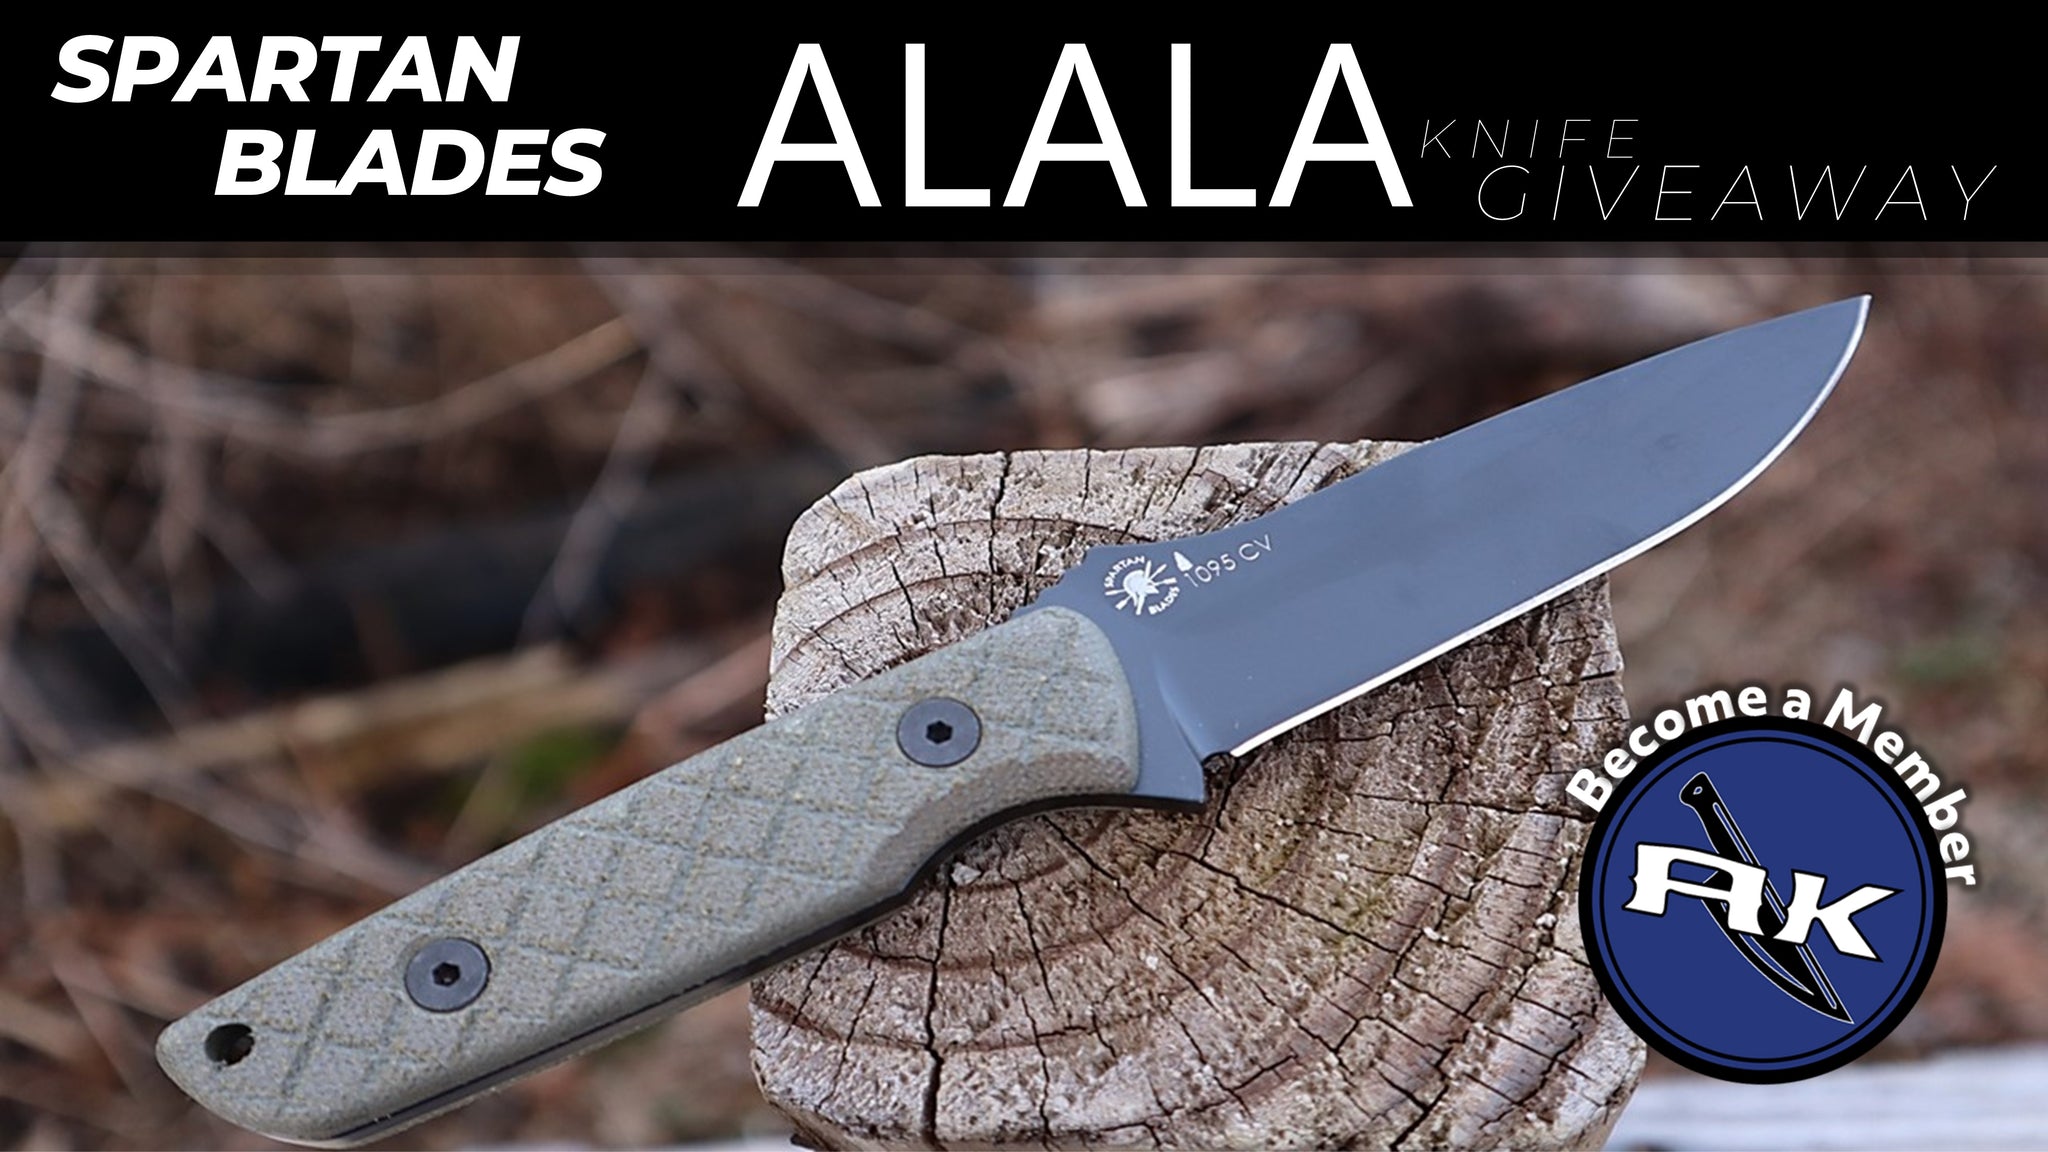 Spartan Blades Alala Giveaway | Atlantic Knife